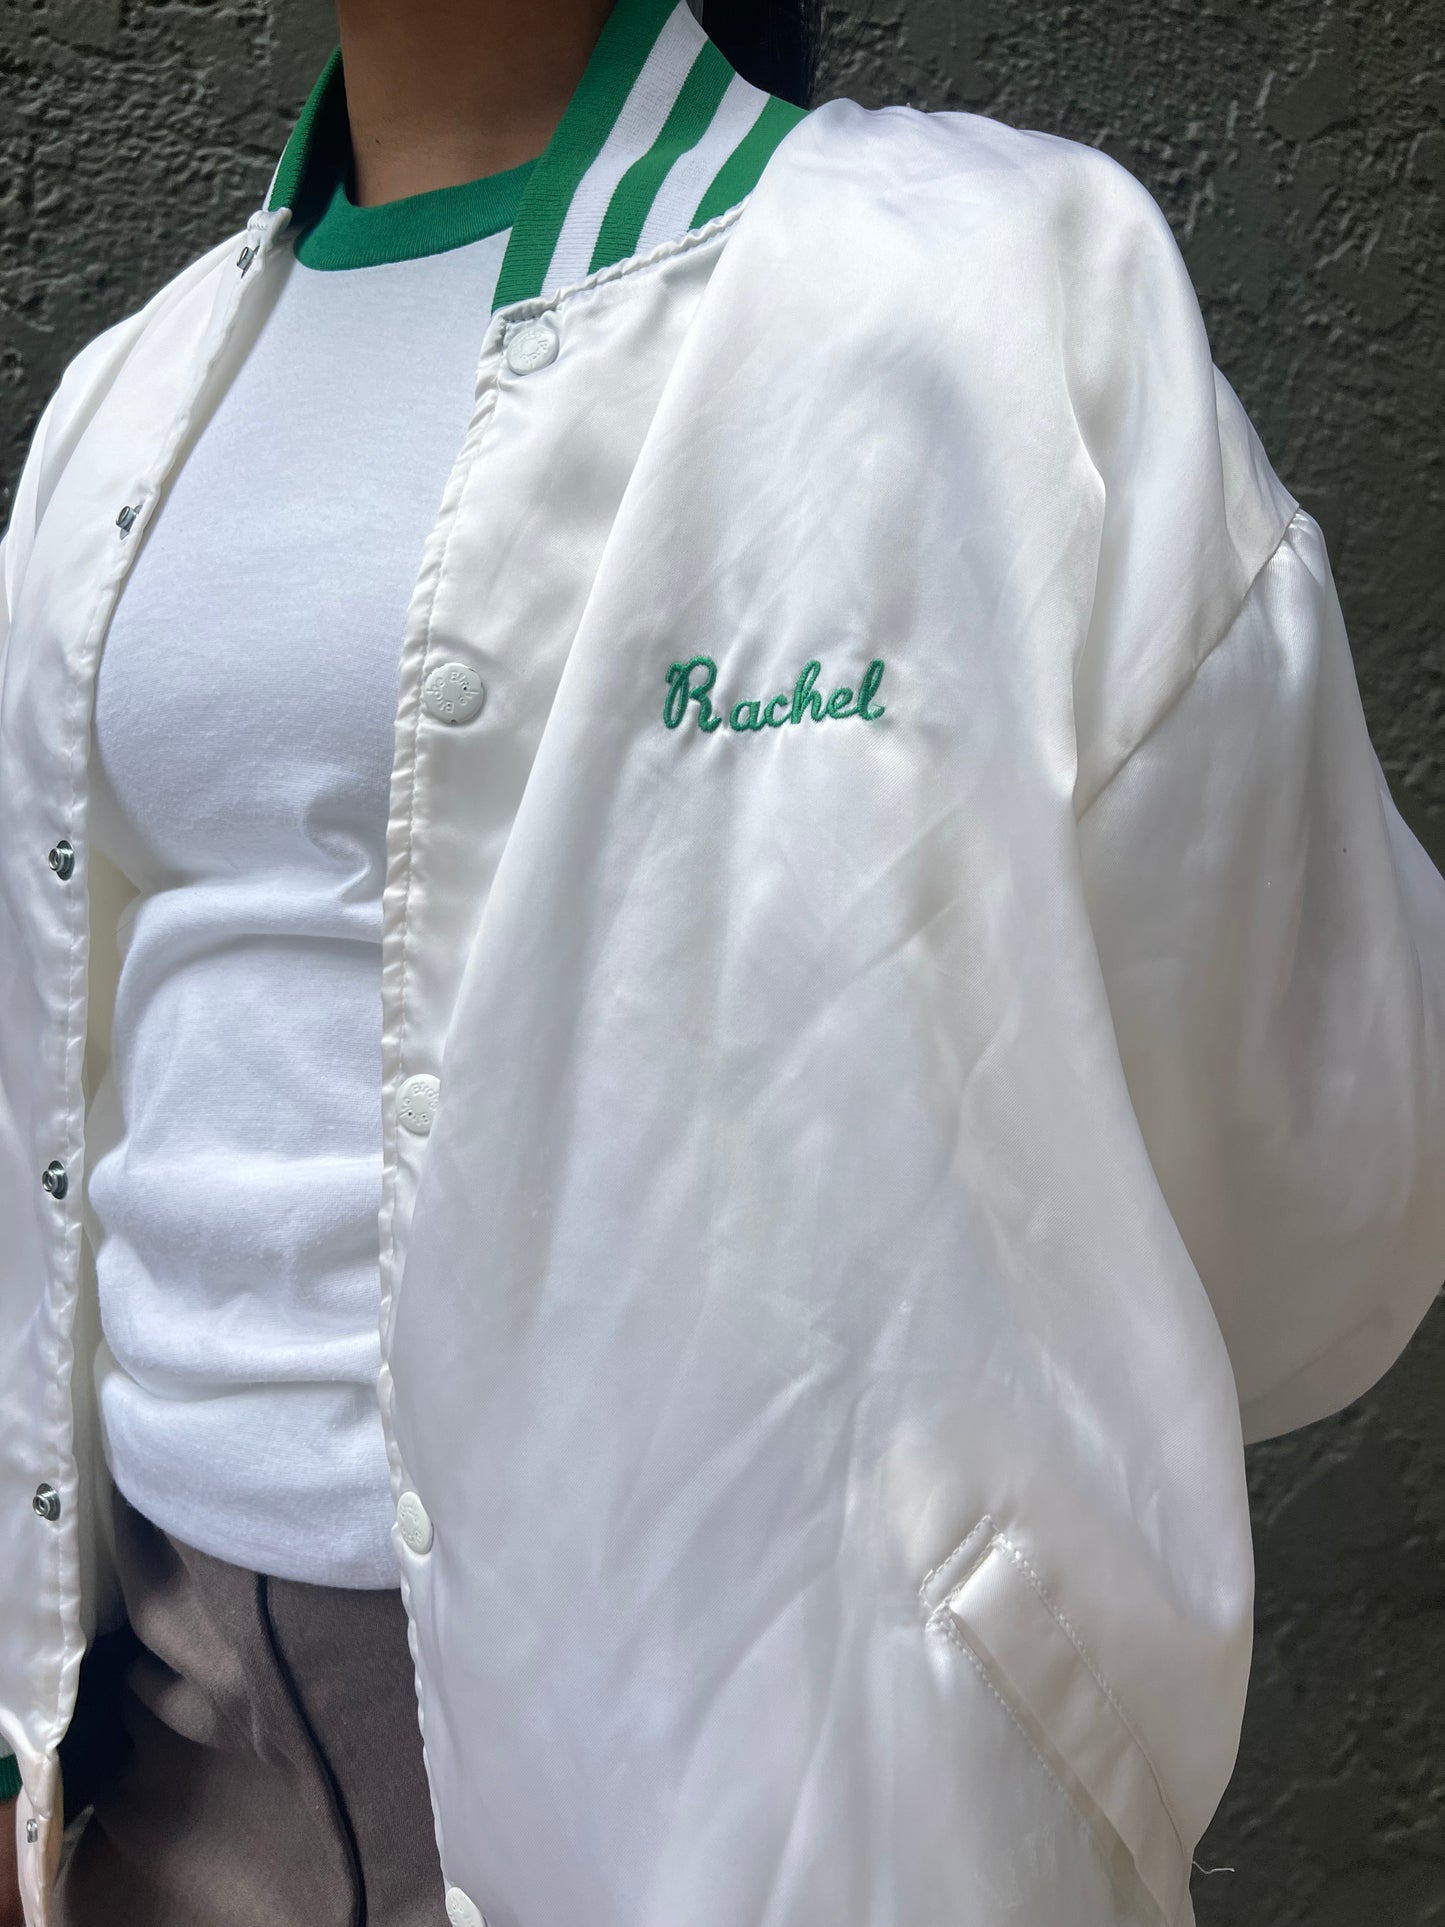 80's Lady Hawks Varsity Nylon Jacket - M/L